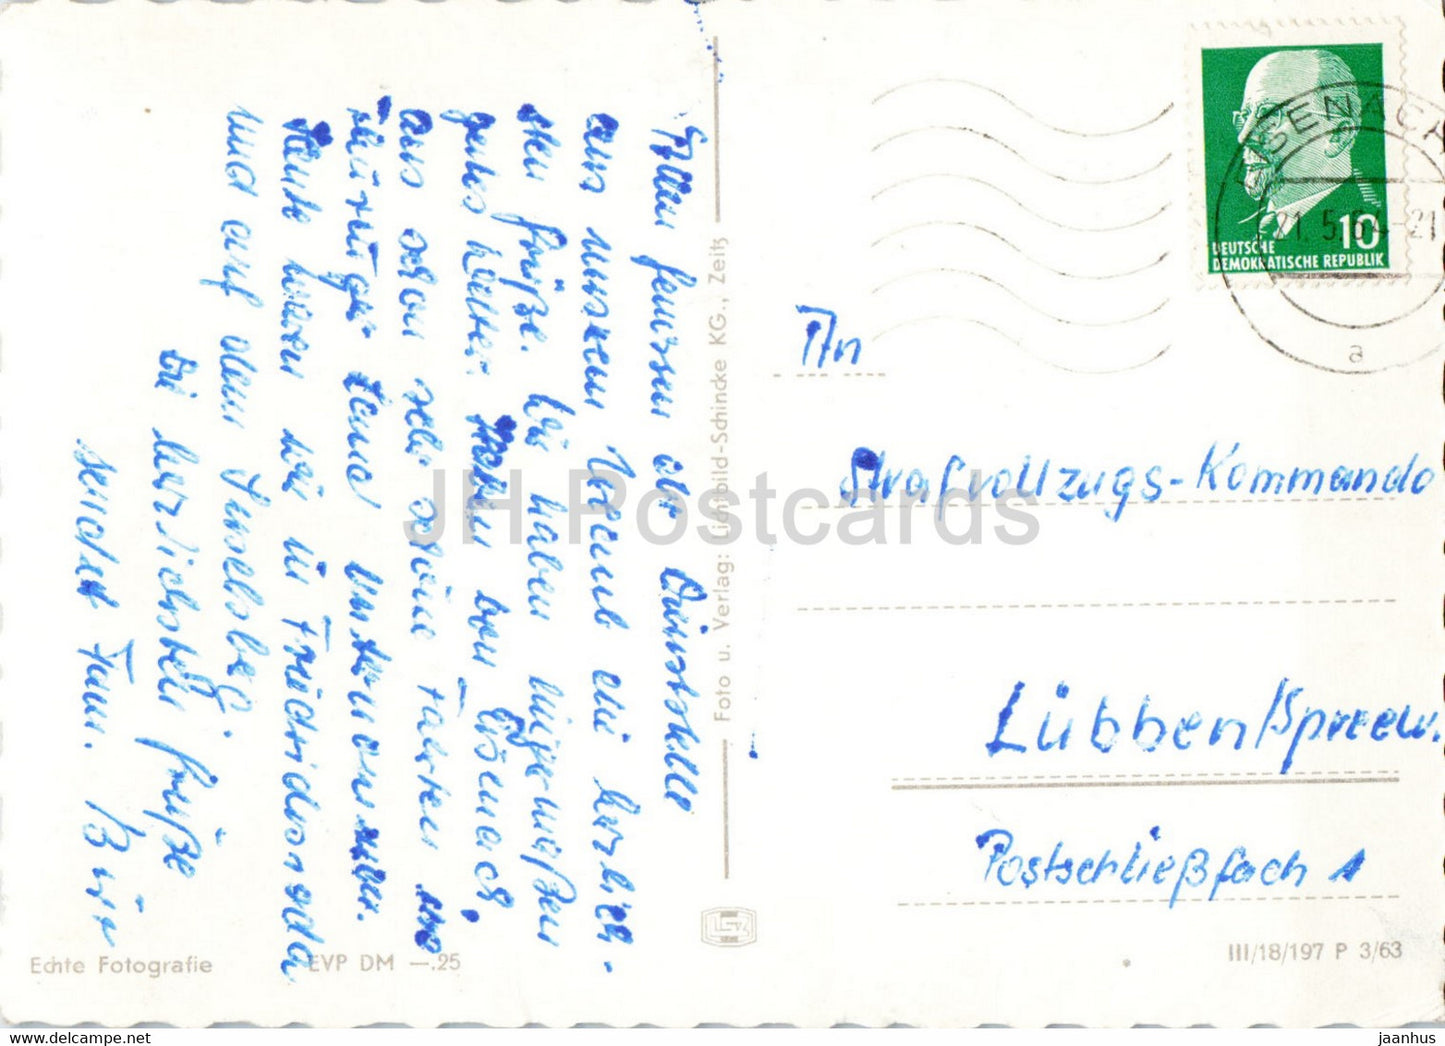 Die Wartburg bei Eisenach - castle - old postcard - 1964 - Germany DDR - used